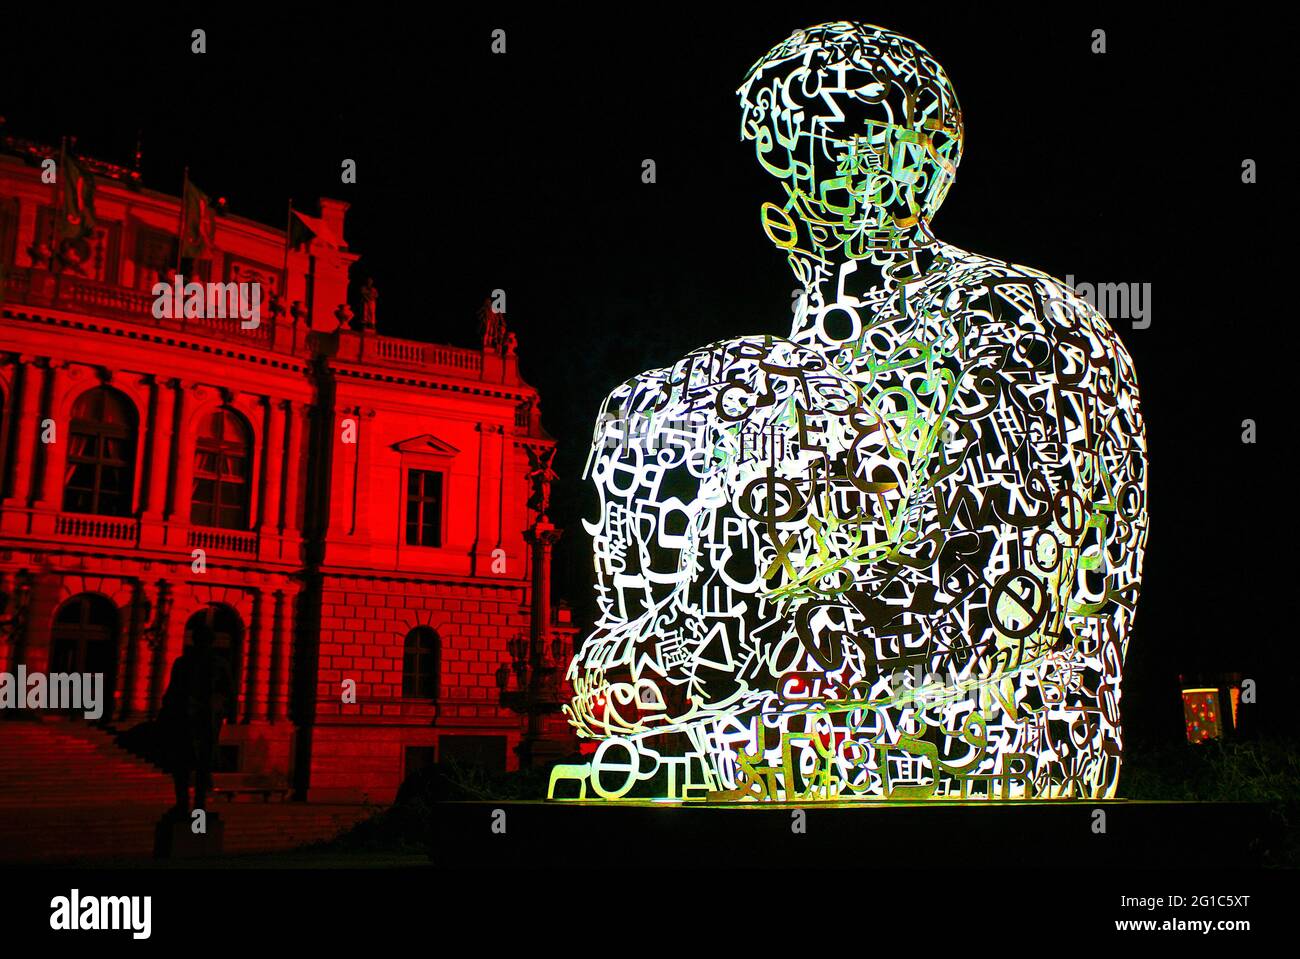 Prague, Czech Republic - June 04, 2009: night illumination of the Sitting Man figure in the center of Prague Stock Photo